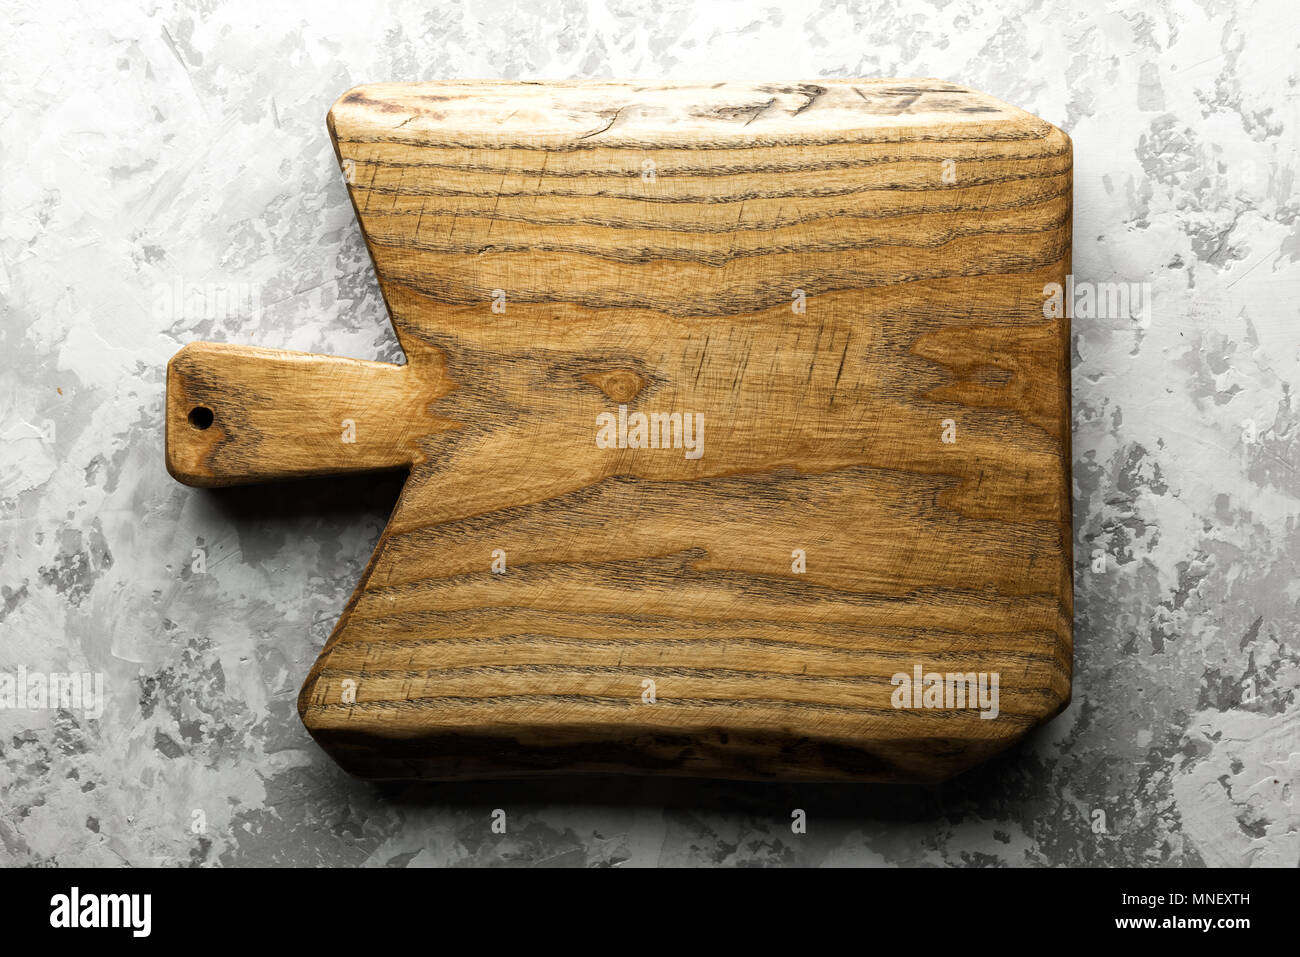 Old oak wood board on grunge concrete table Stock Photo